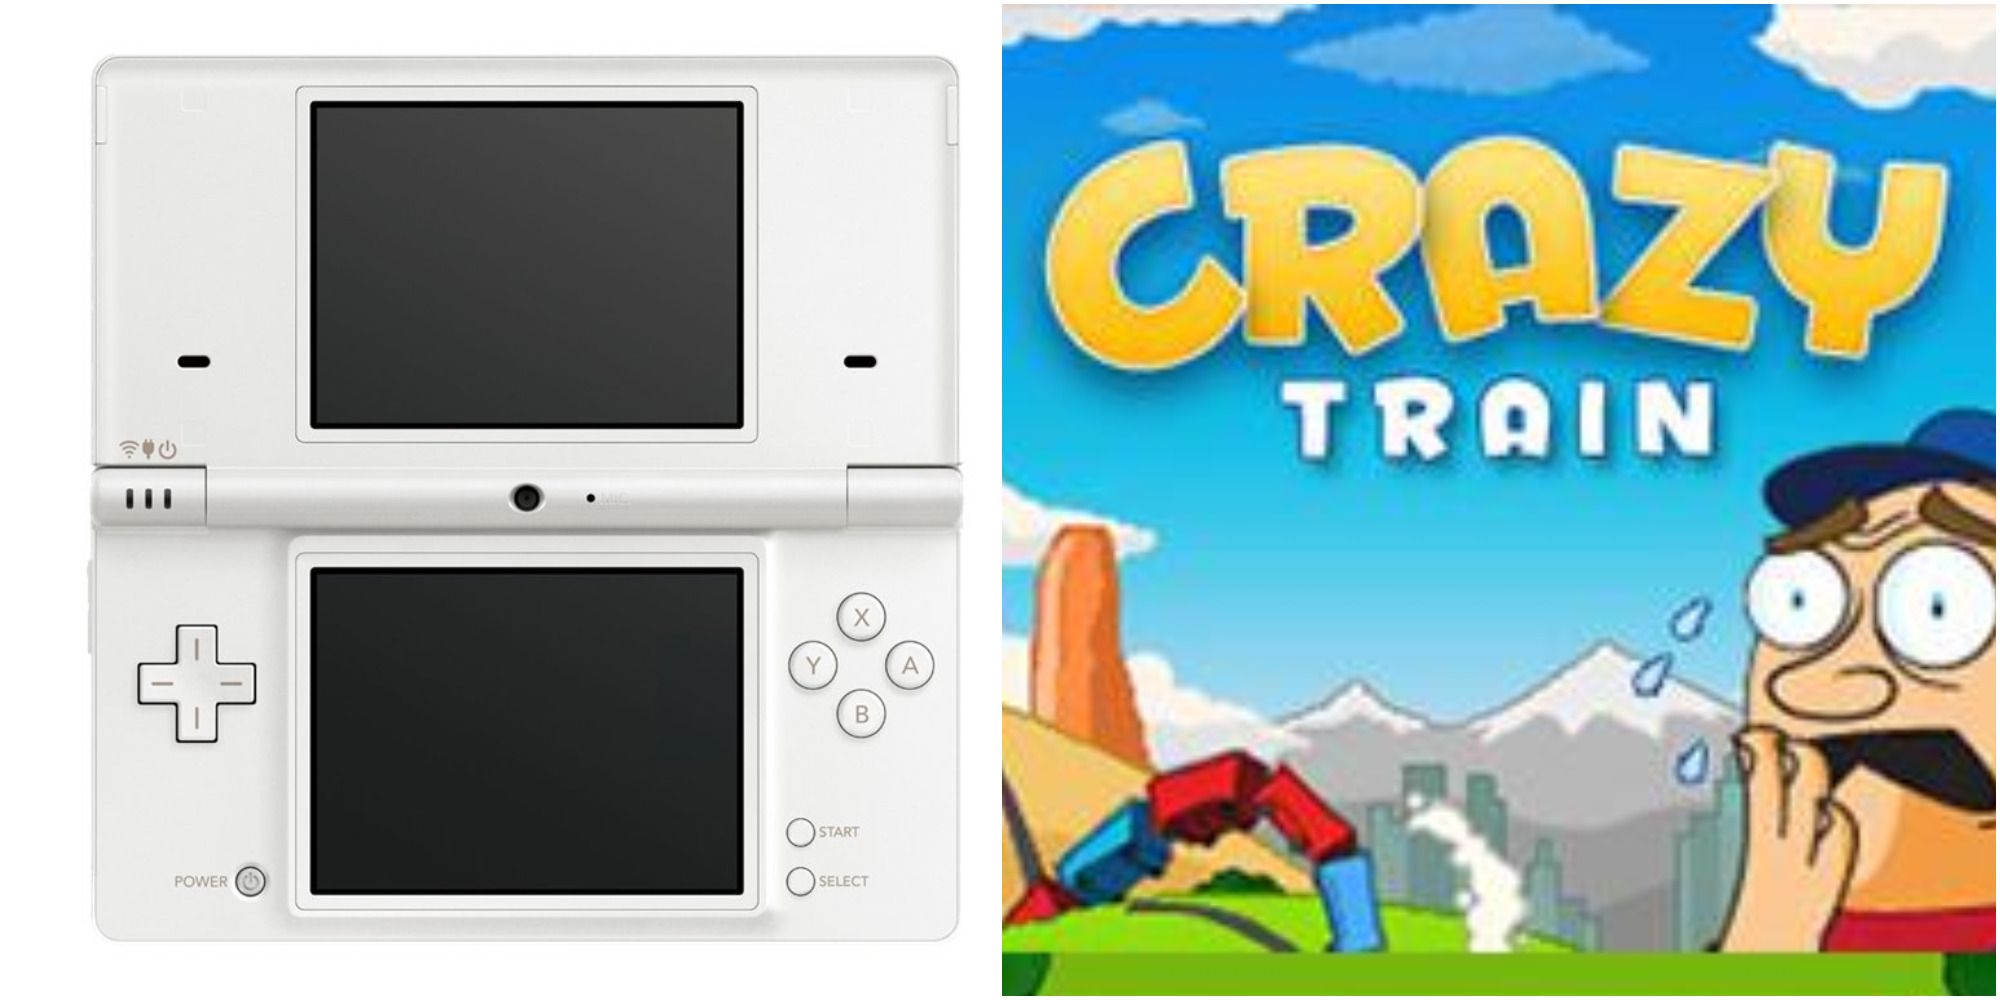 White Nintendo DSi Console and Crazy Train game art